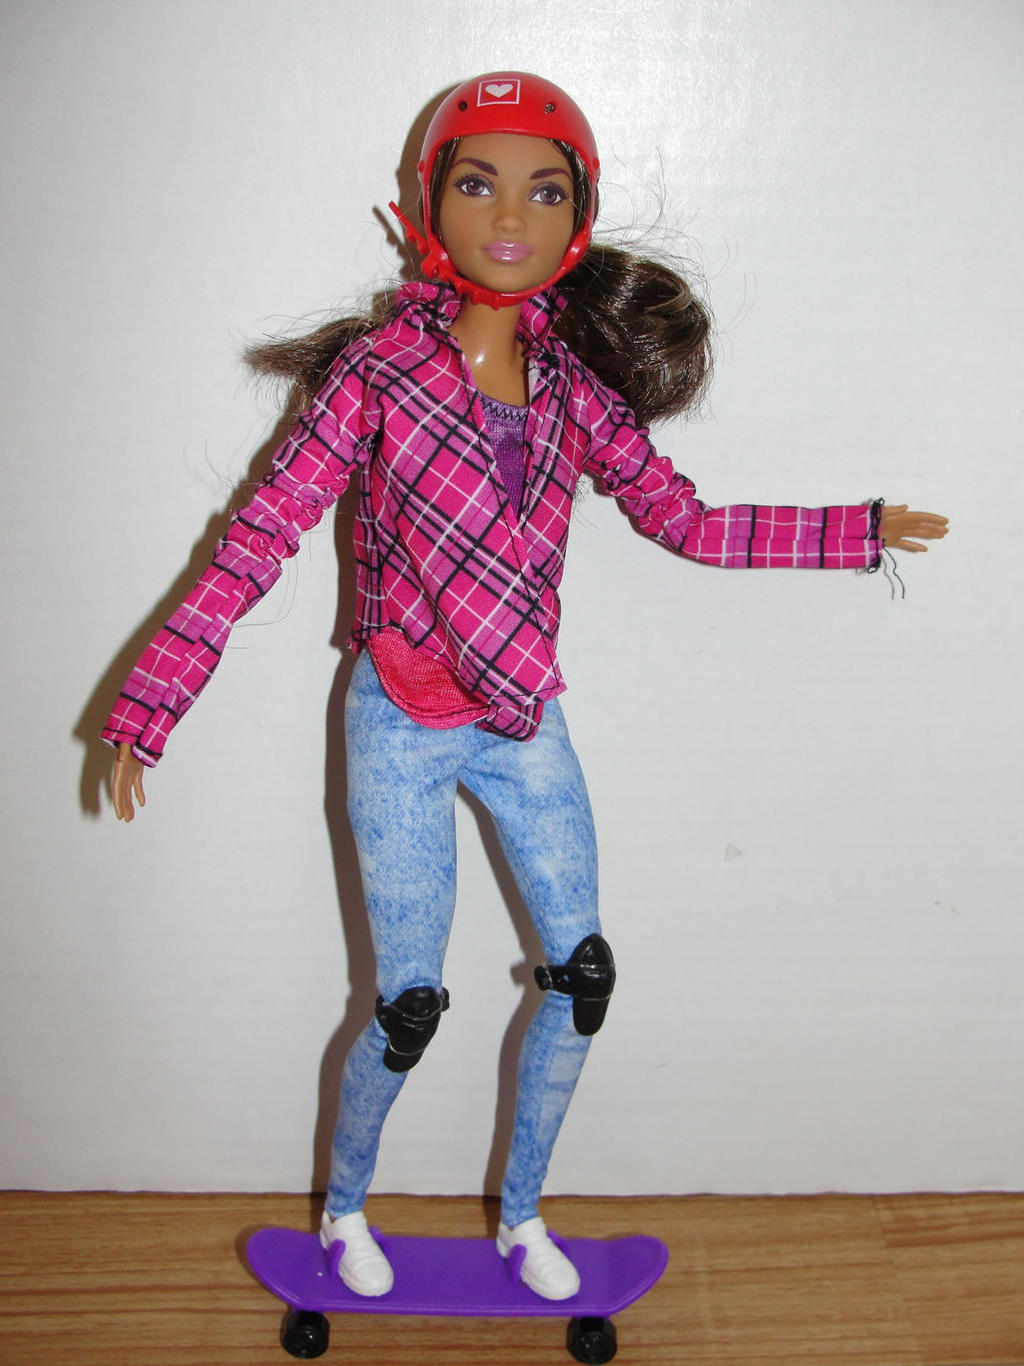 Barbie Made to Move Skateboarder by bondagebondi on DeviantArt